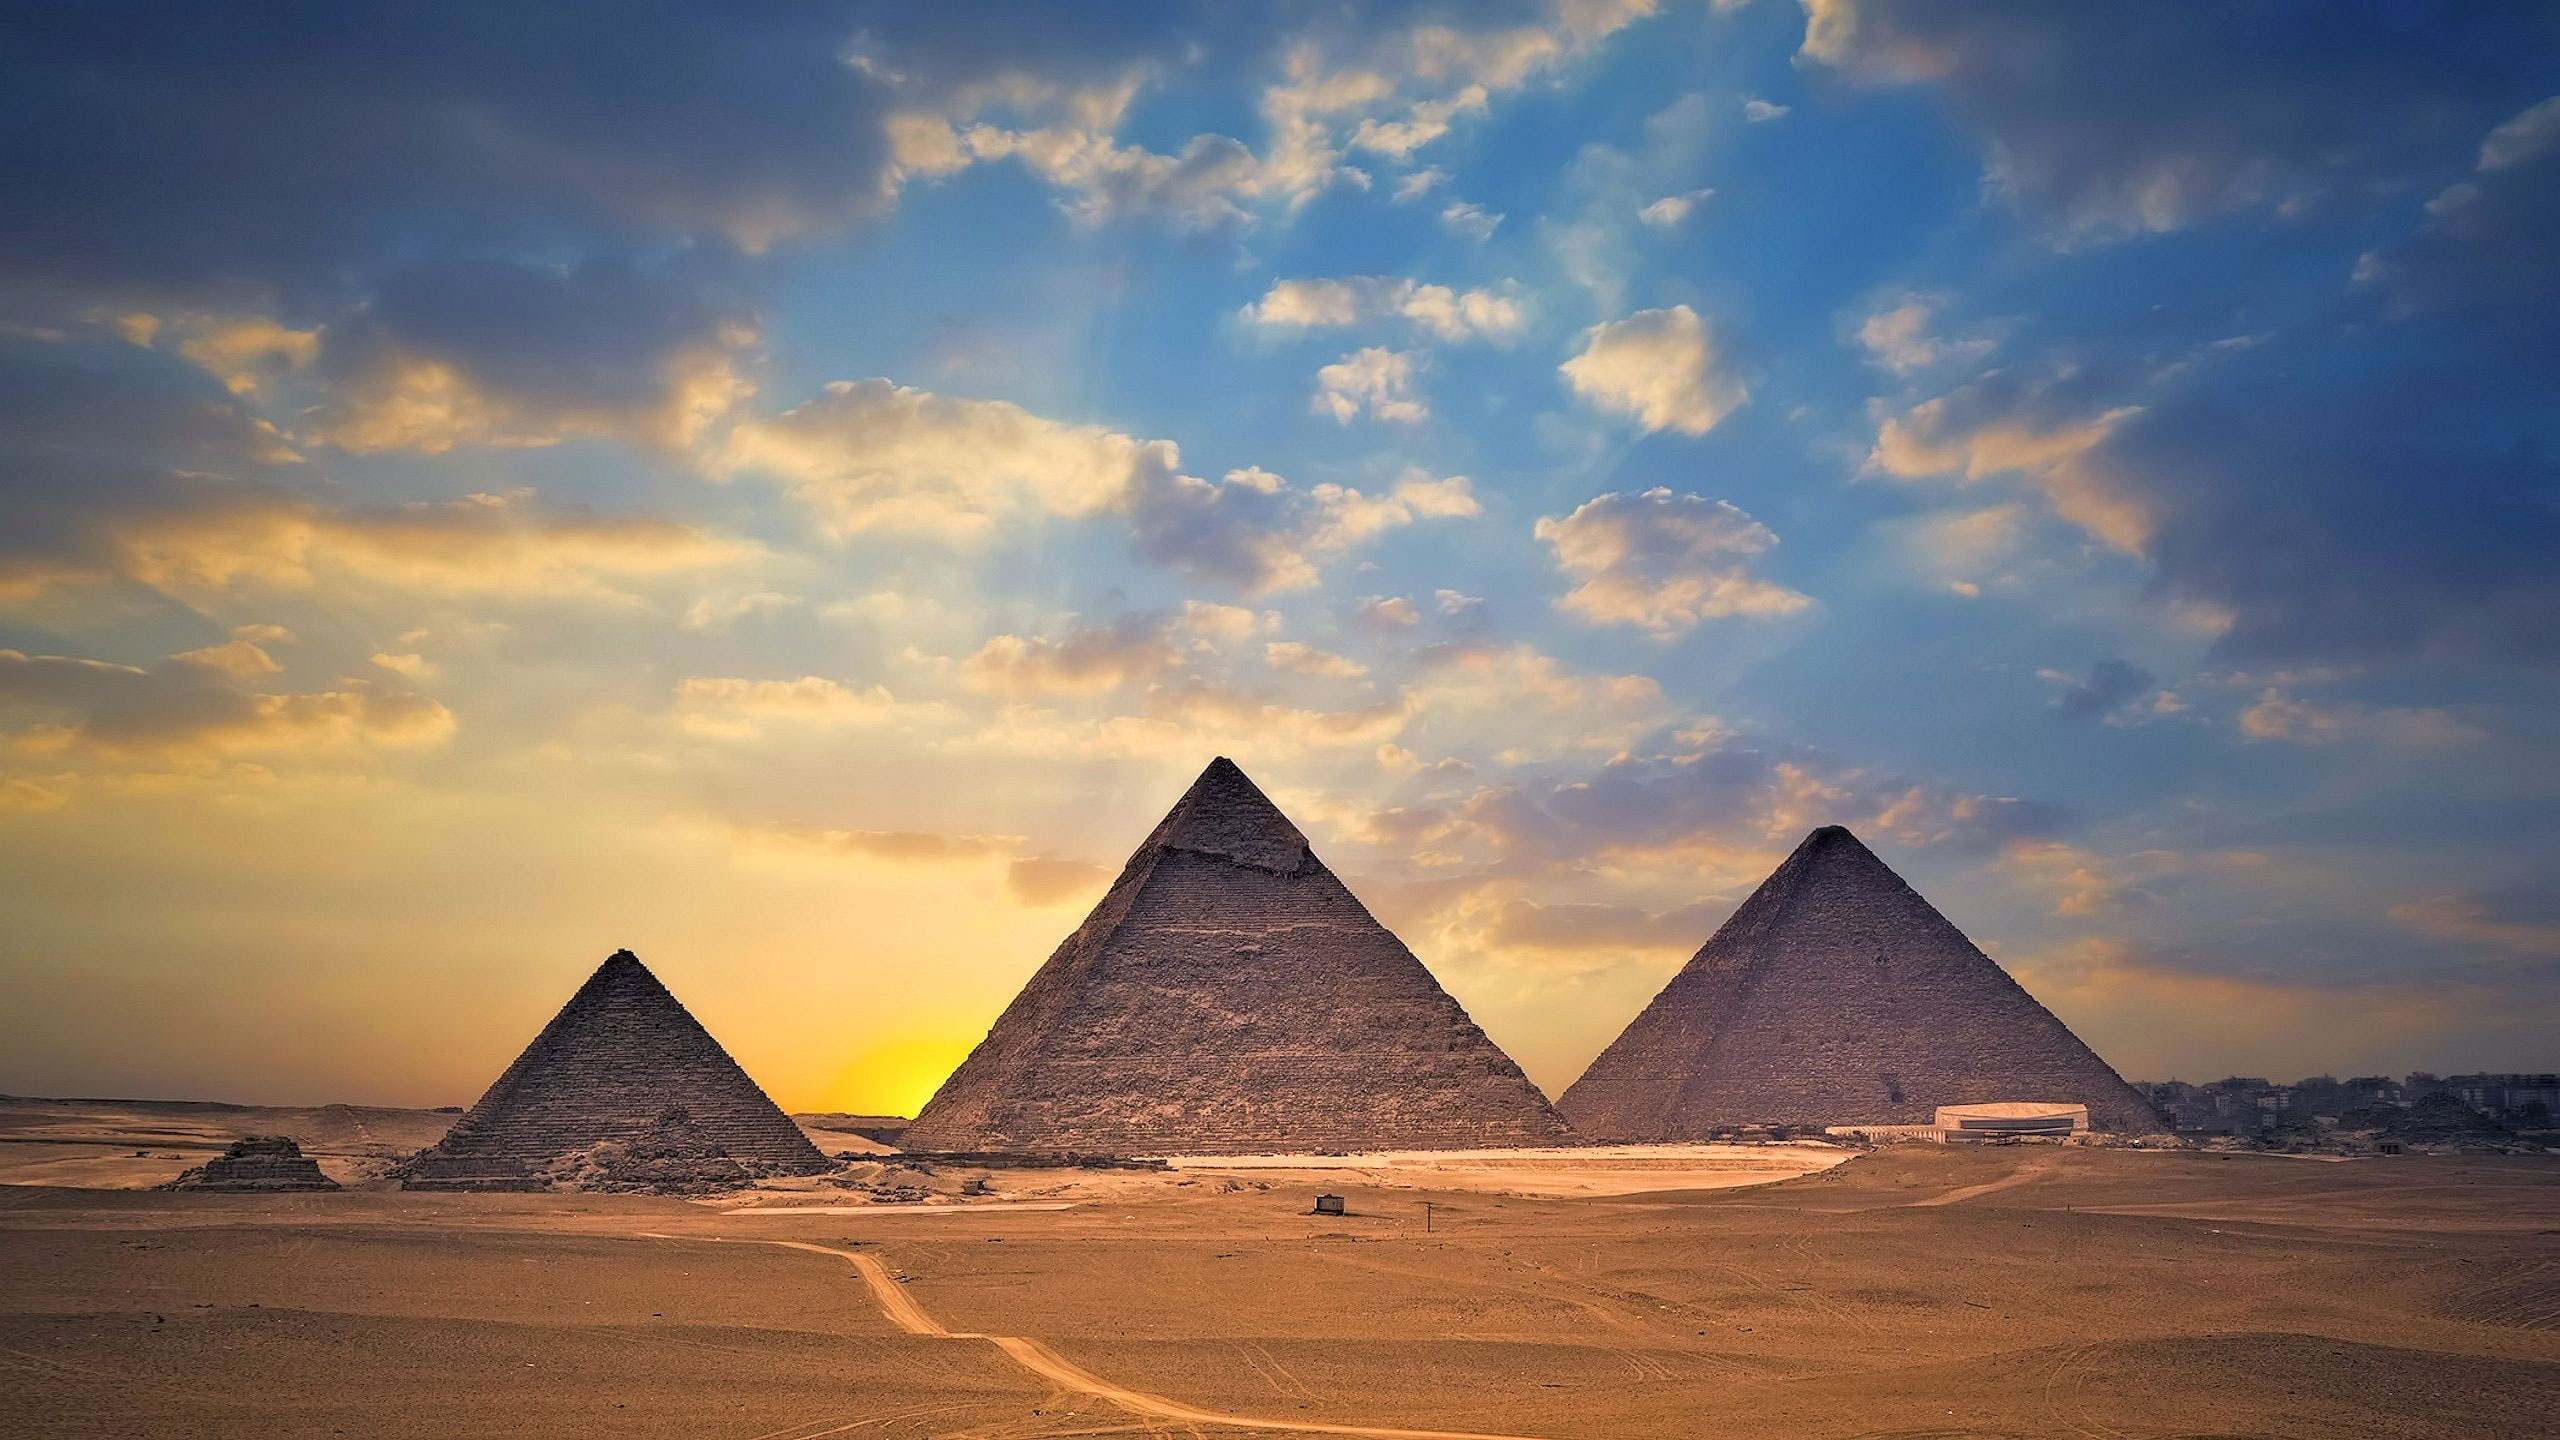 Pyramids of Giza, Awe-inspiring wallpaper, Pyramid mystique, Magnificent ancient structures, 2560x1440 HD Desktop